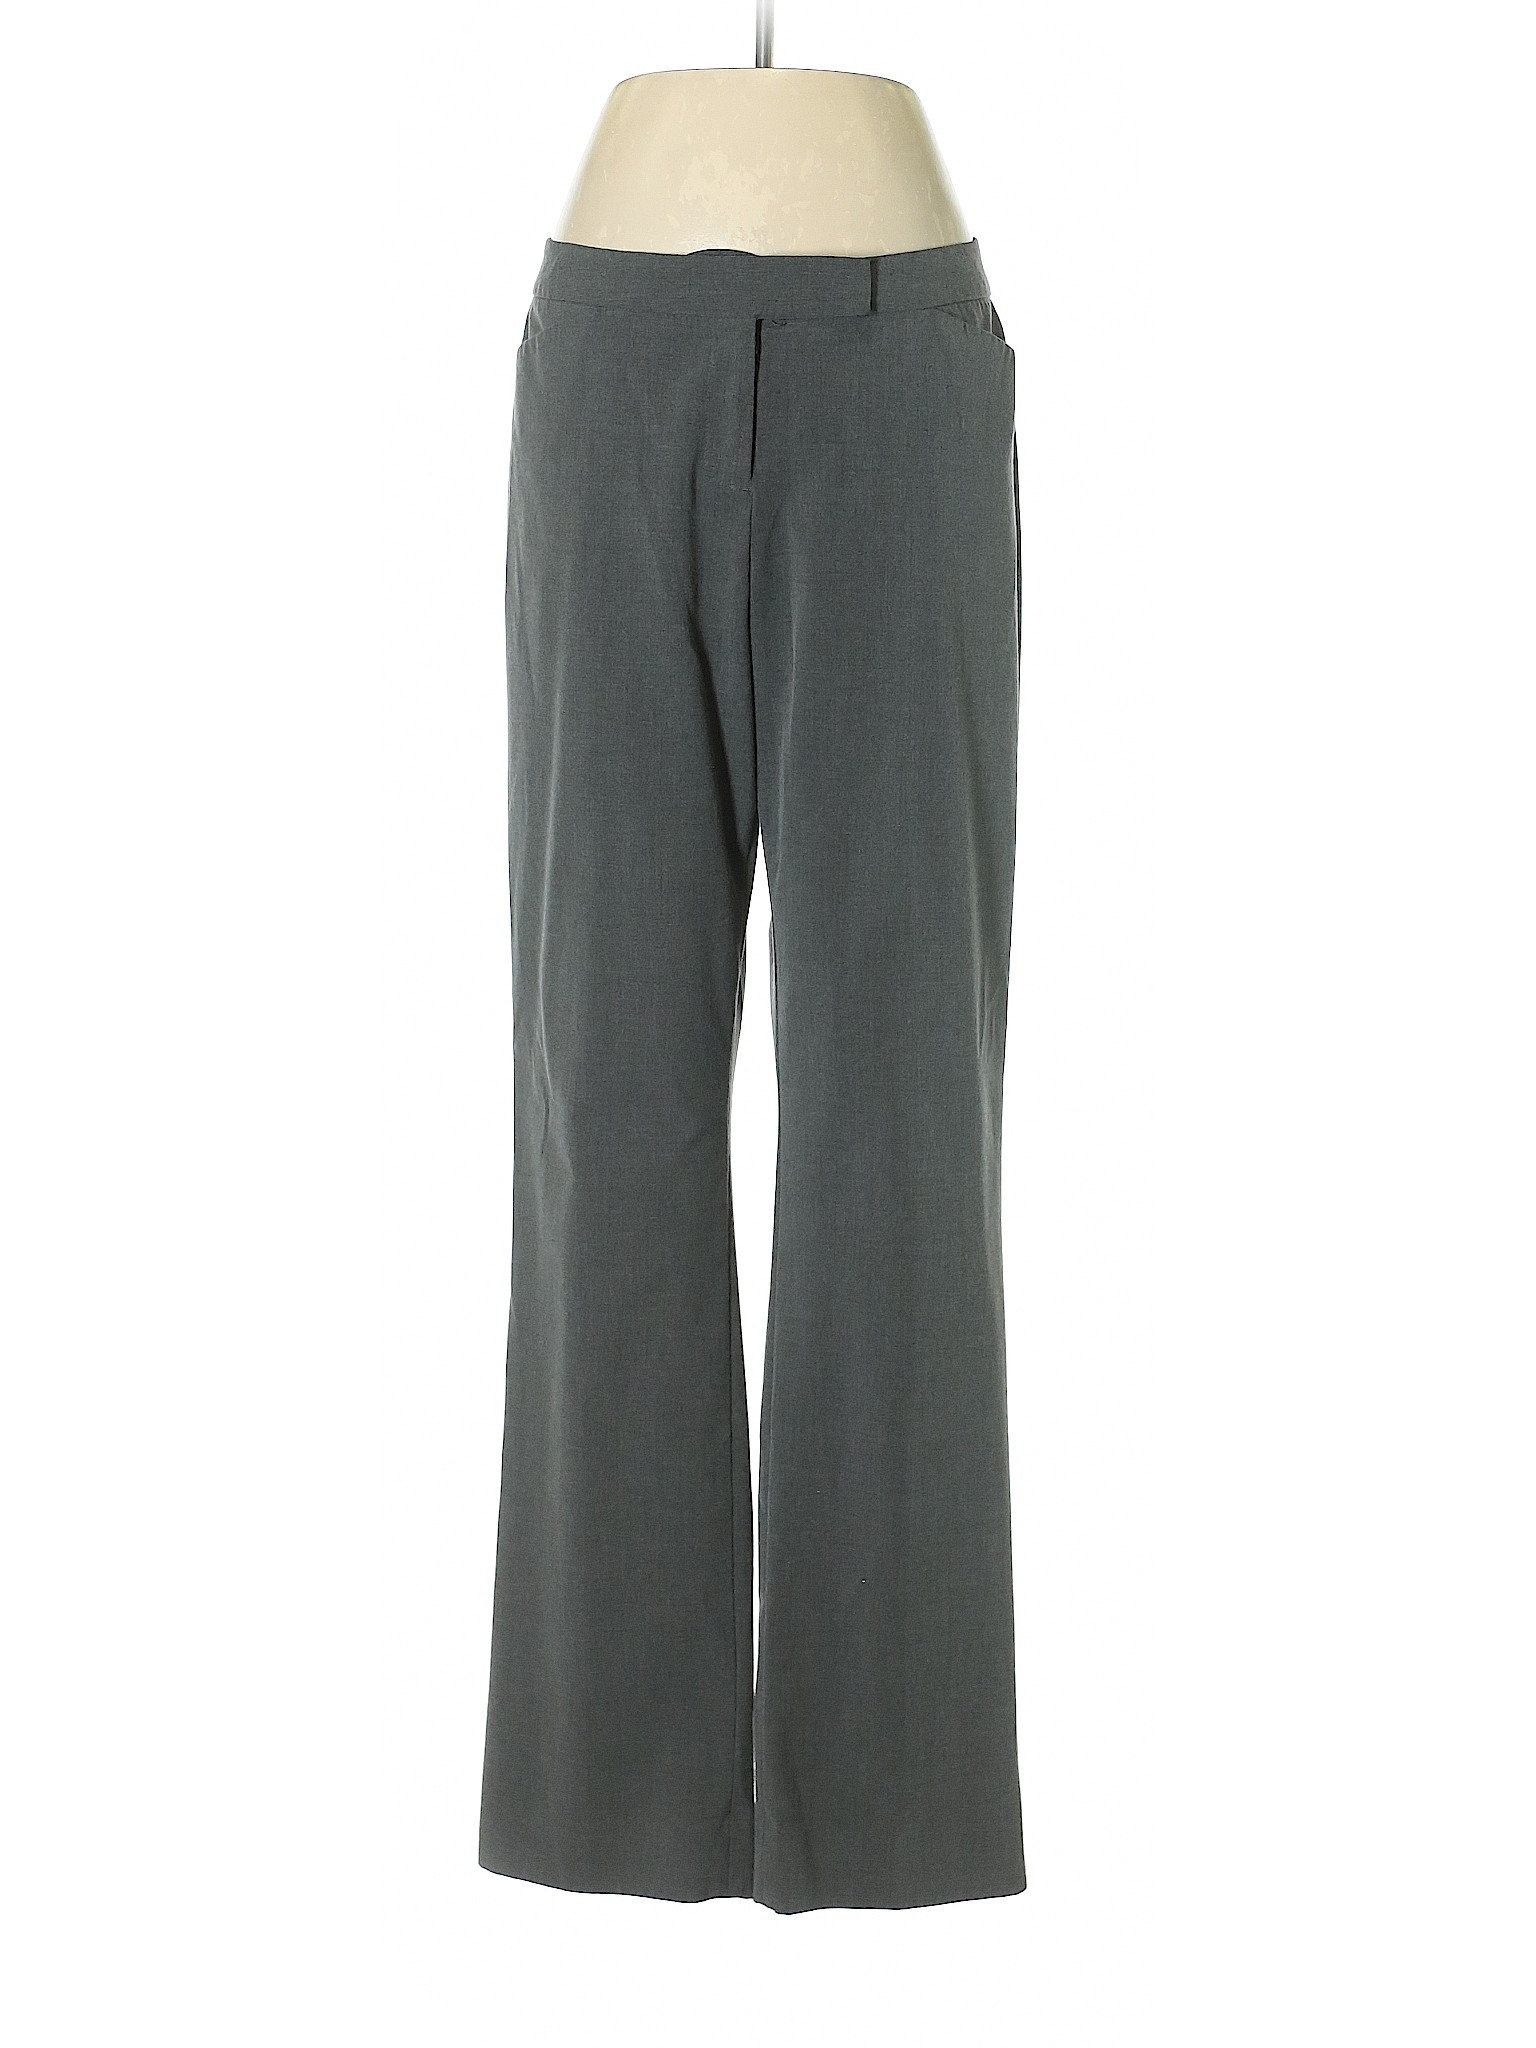 The Limited Women Gray Dress Pants 6 | eBay